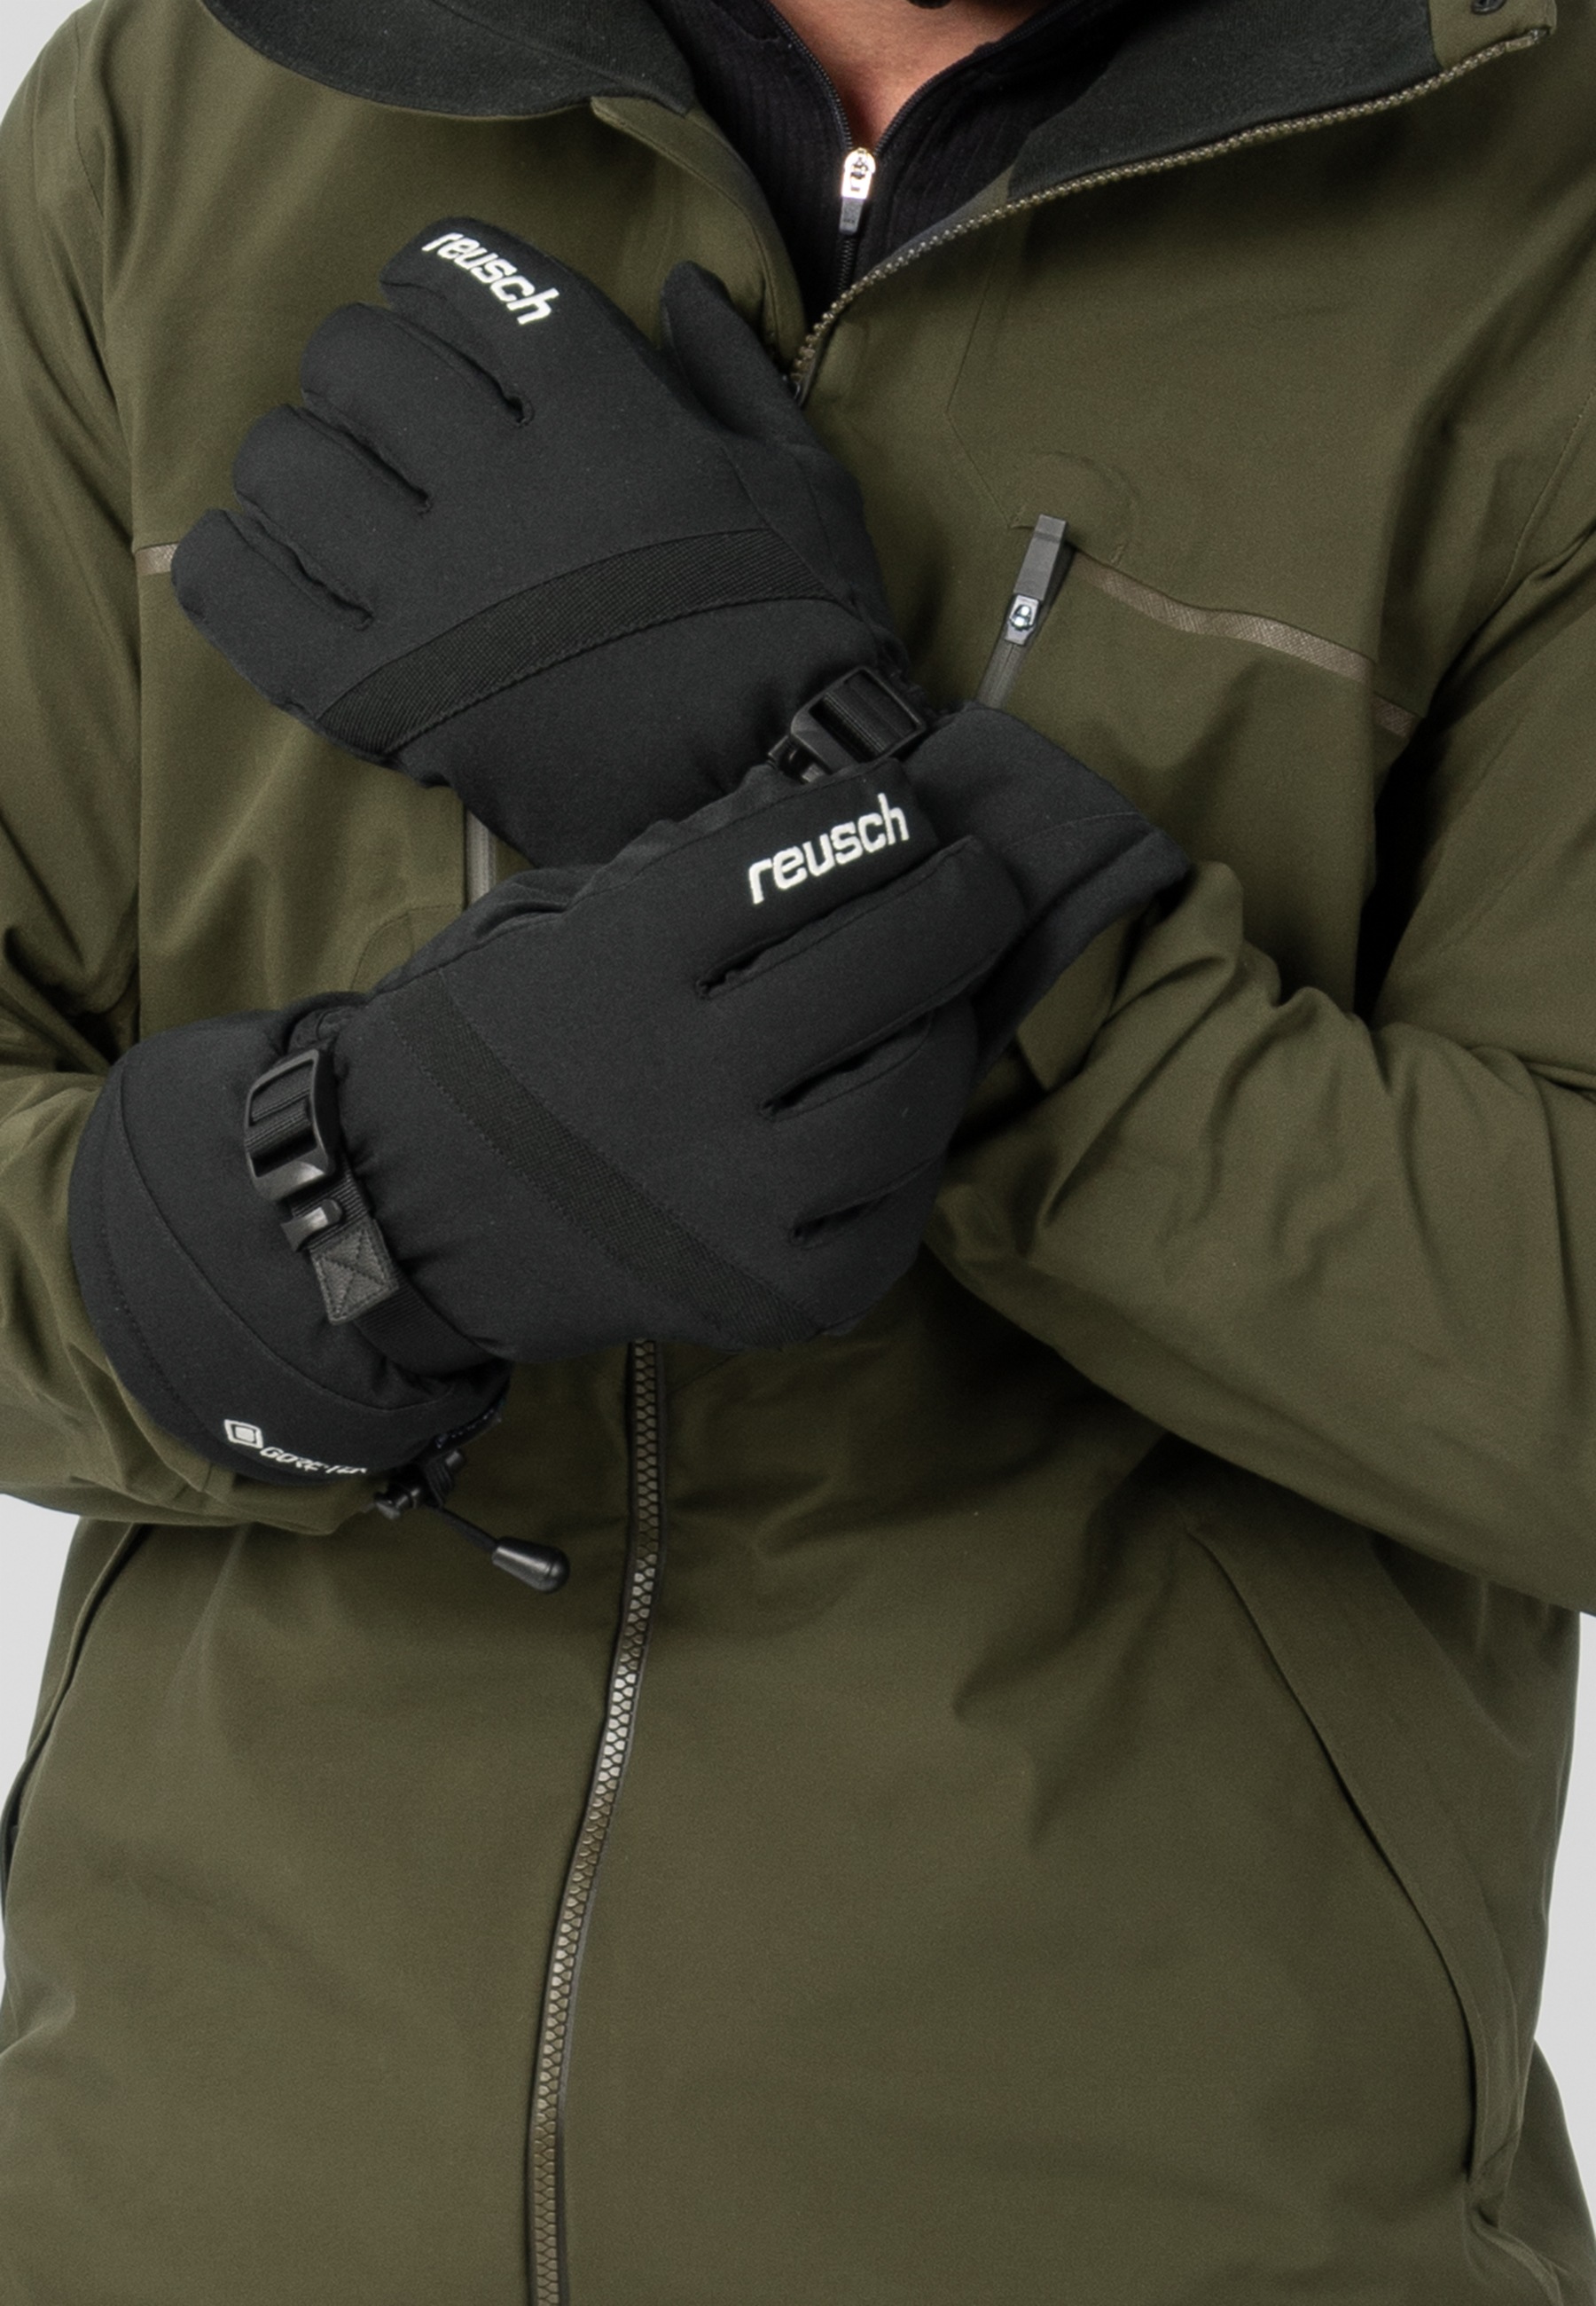 GORE-TEX«, walking wasserdichtem Onlineshop Reusch »Winter aus Glove I\'m Skihandschuhe atmungsaktivem Warm Material im | und